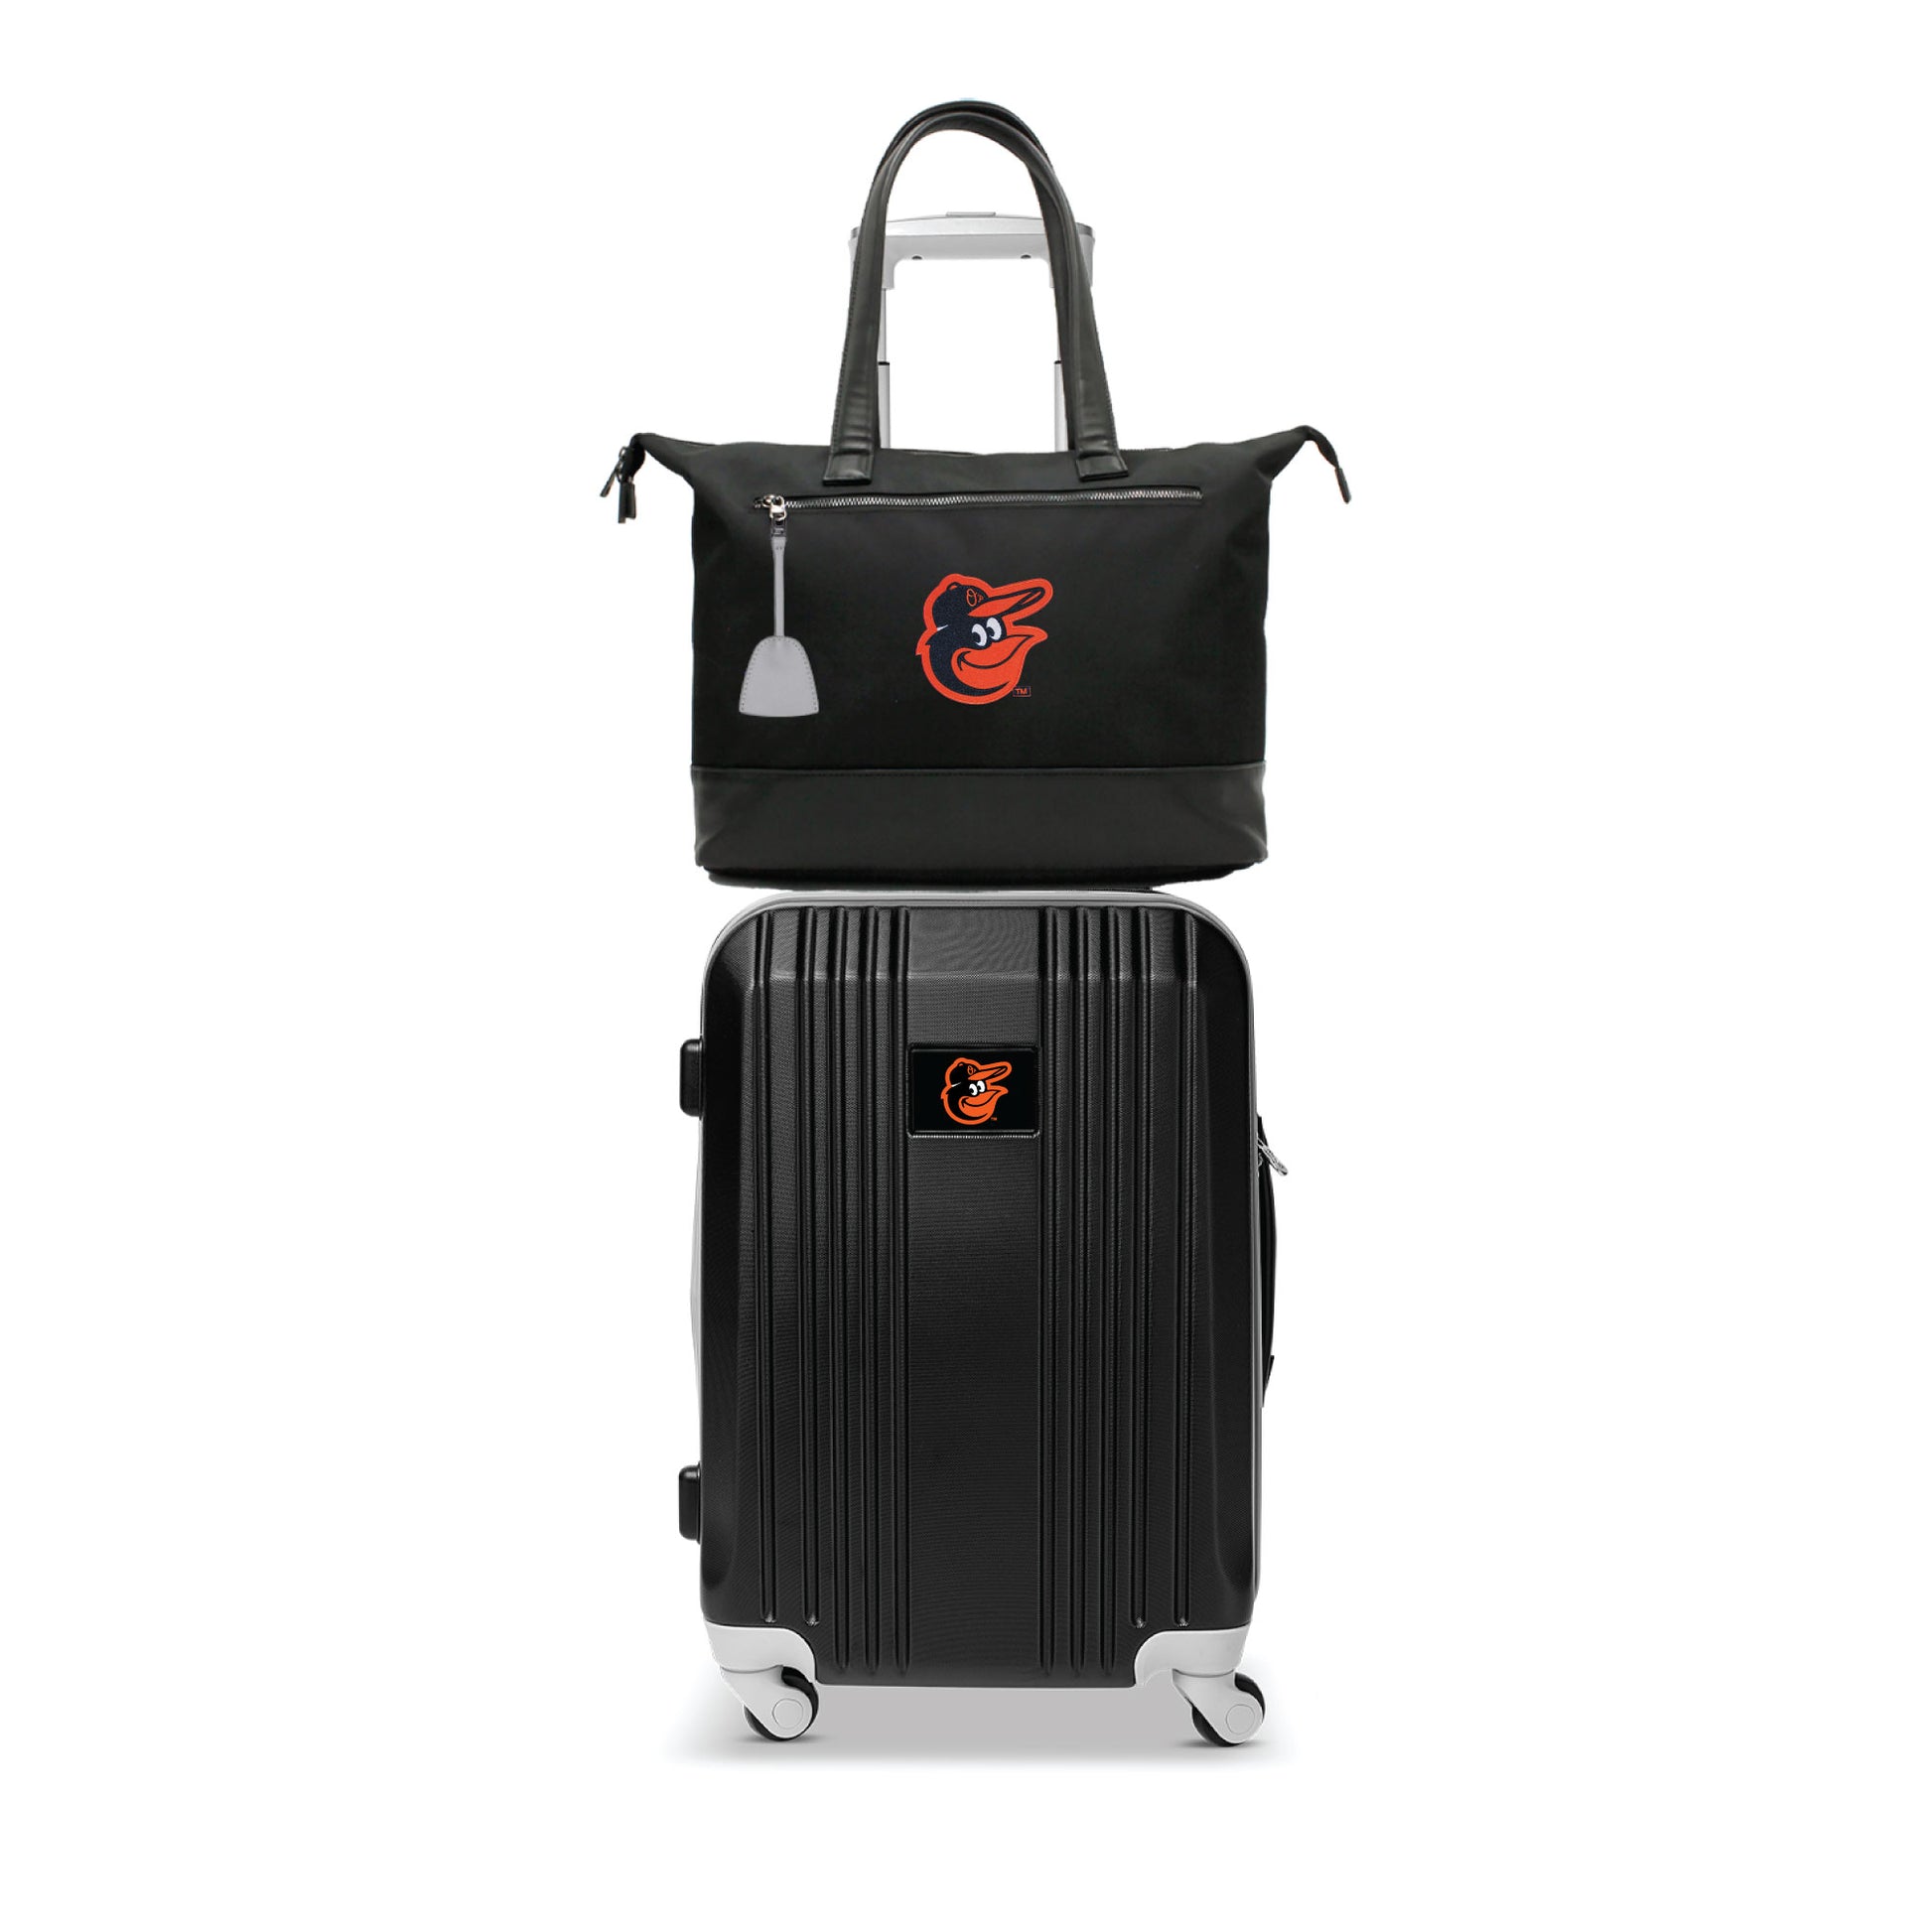 Baltimore Orioles Premium Laptop Tote Bag and Luggage Set